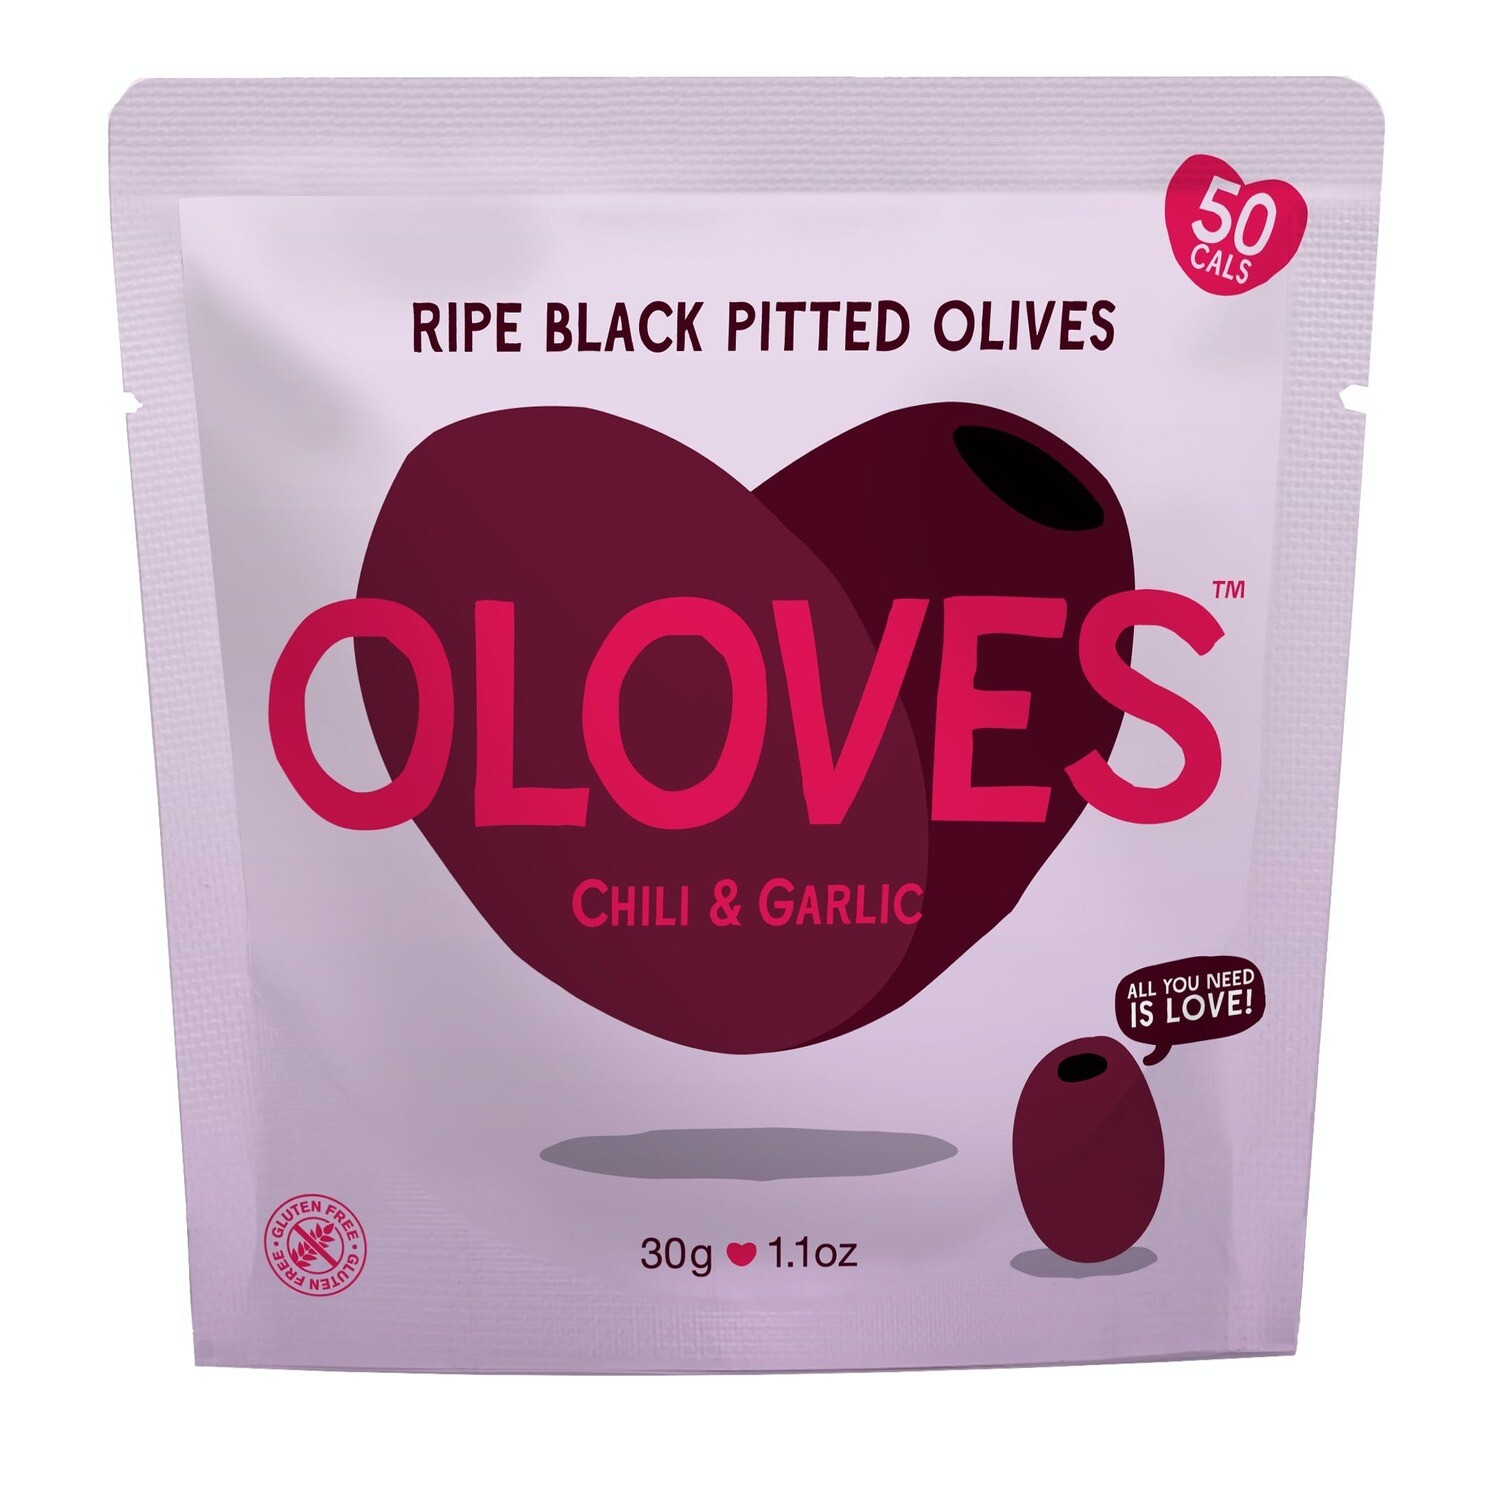 Oloves Chili & Garlic Pitted Black Olives